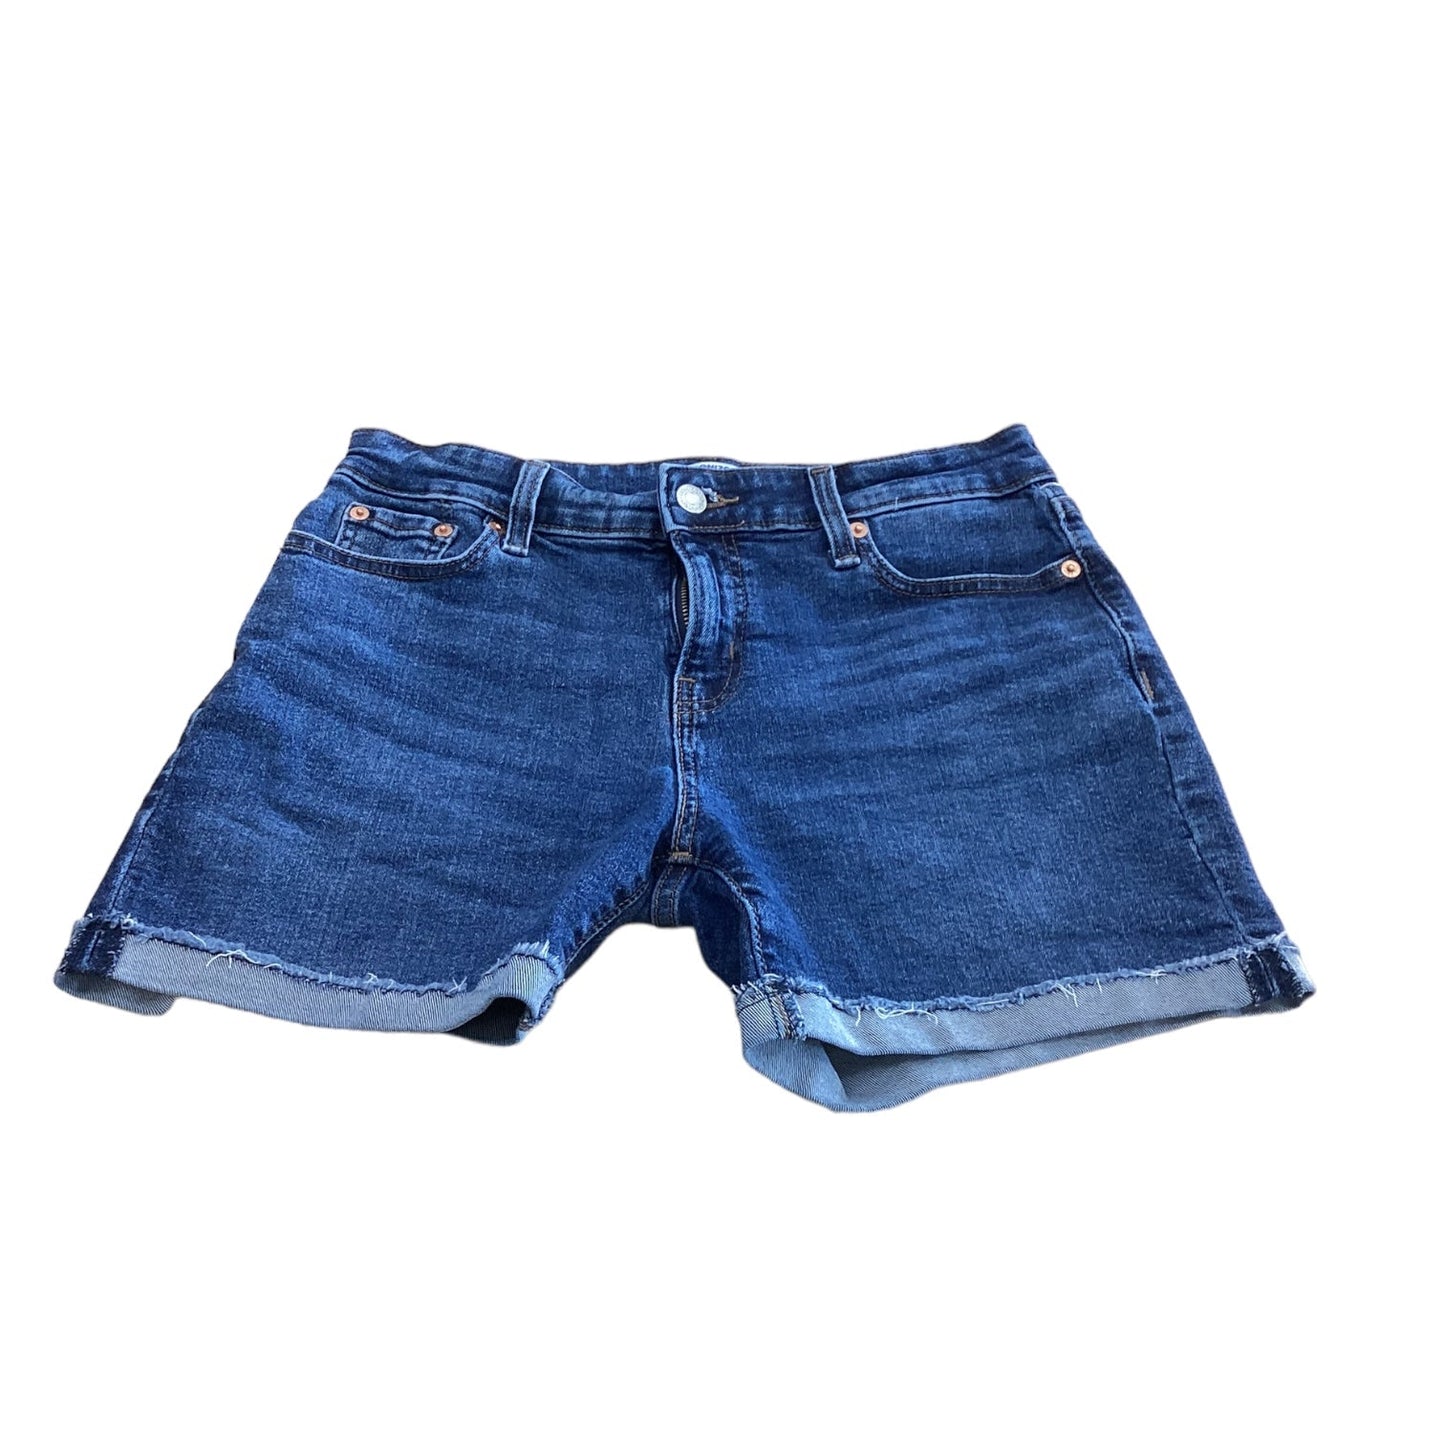 Blue Denim Shorts Denizen By Levis, Size 4